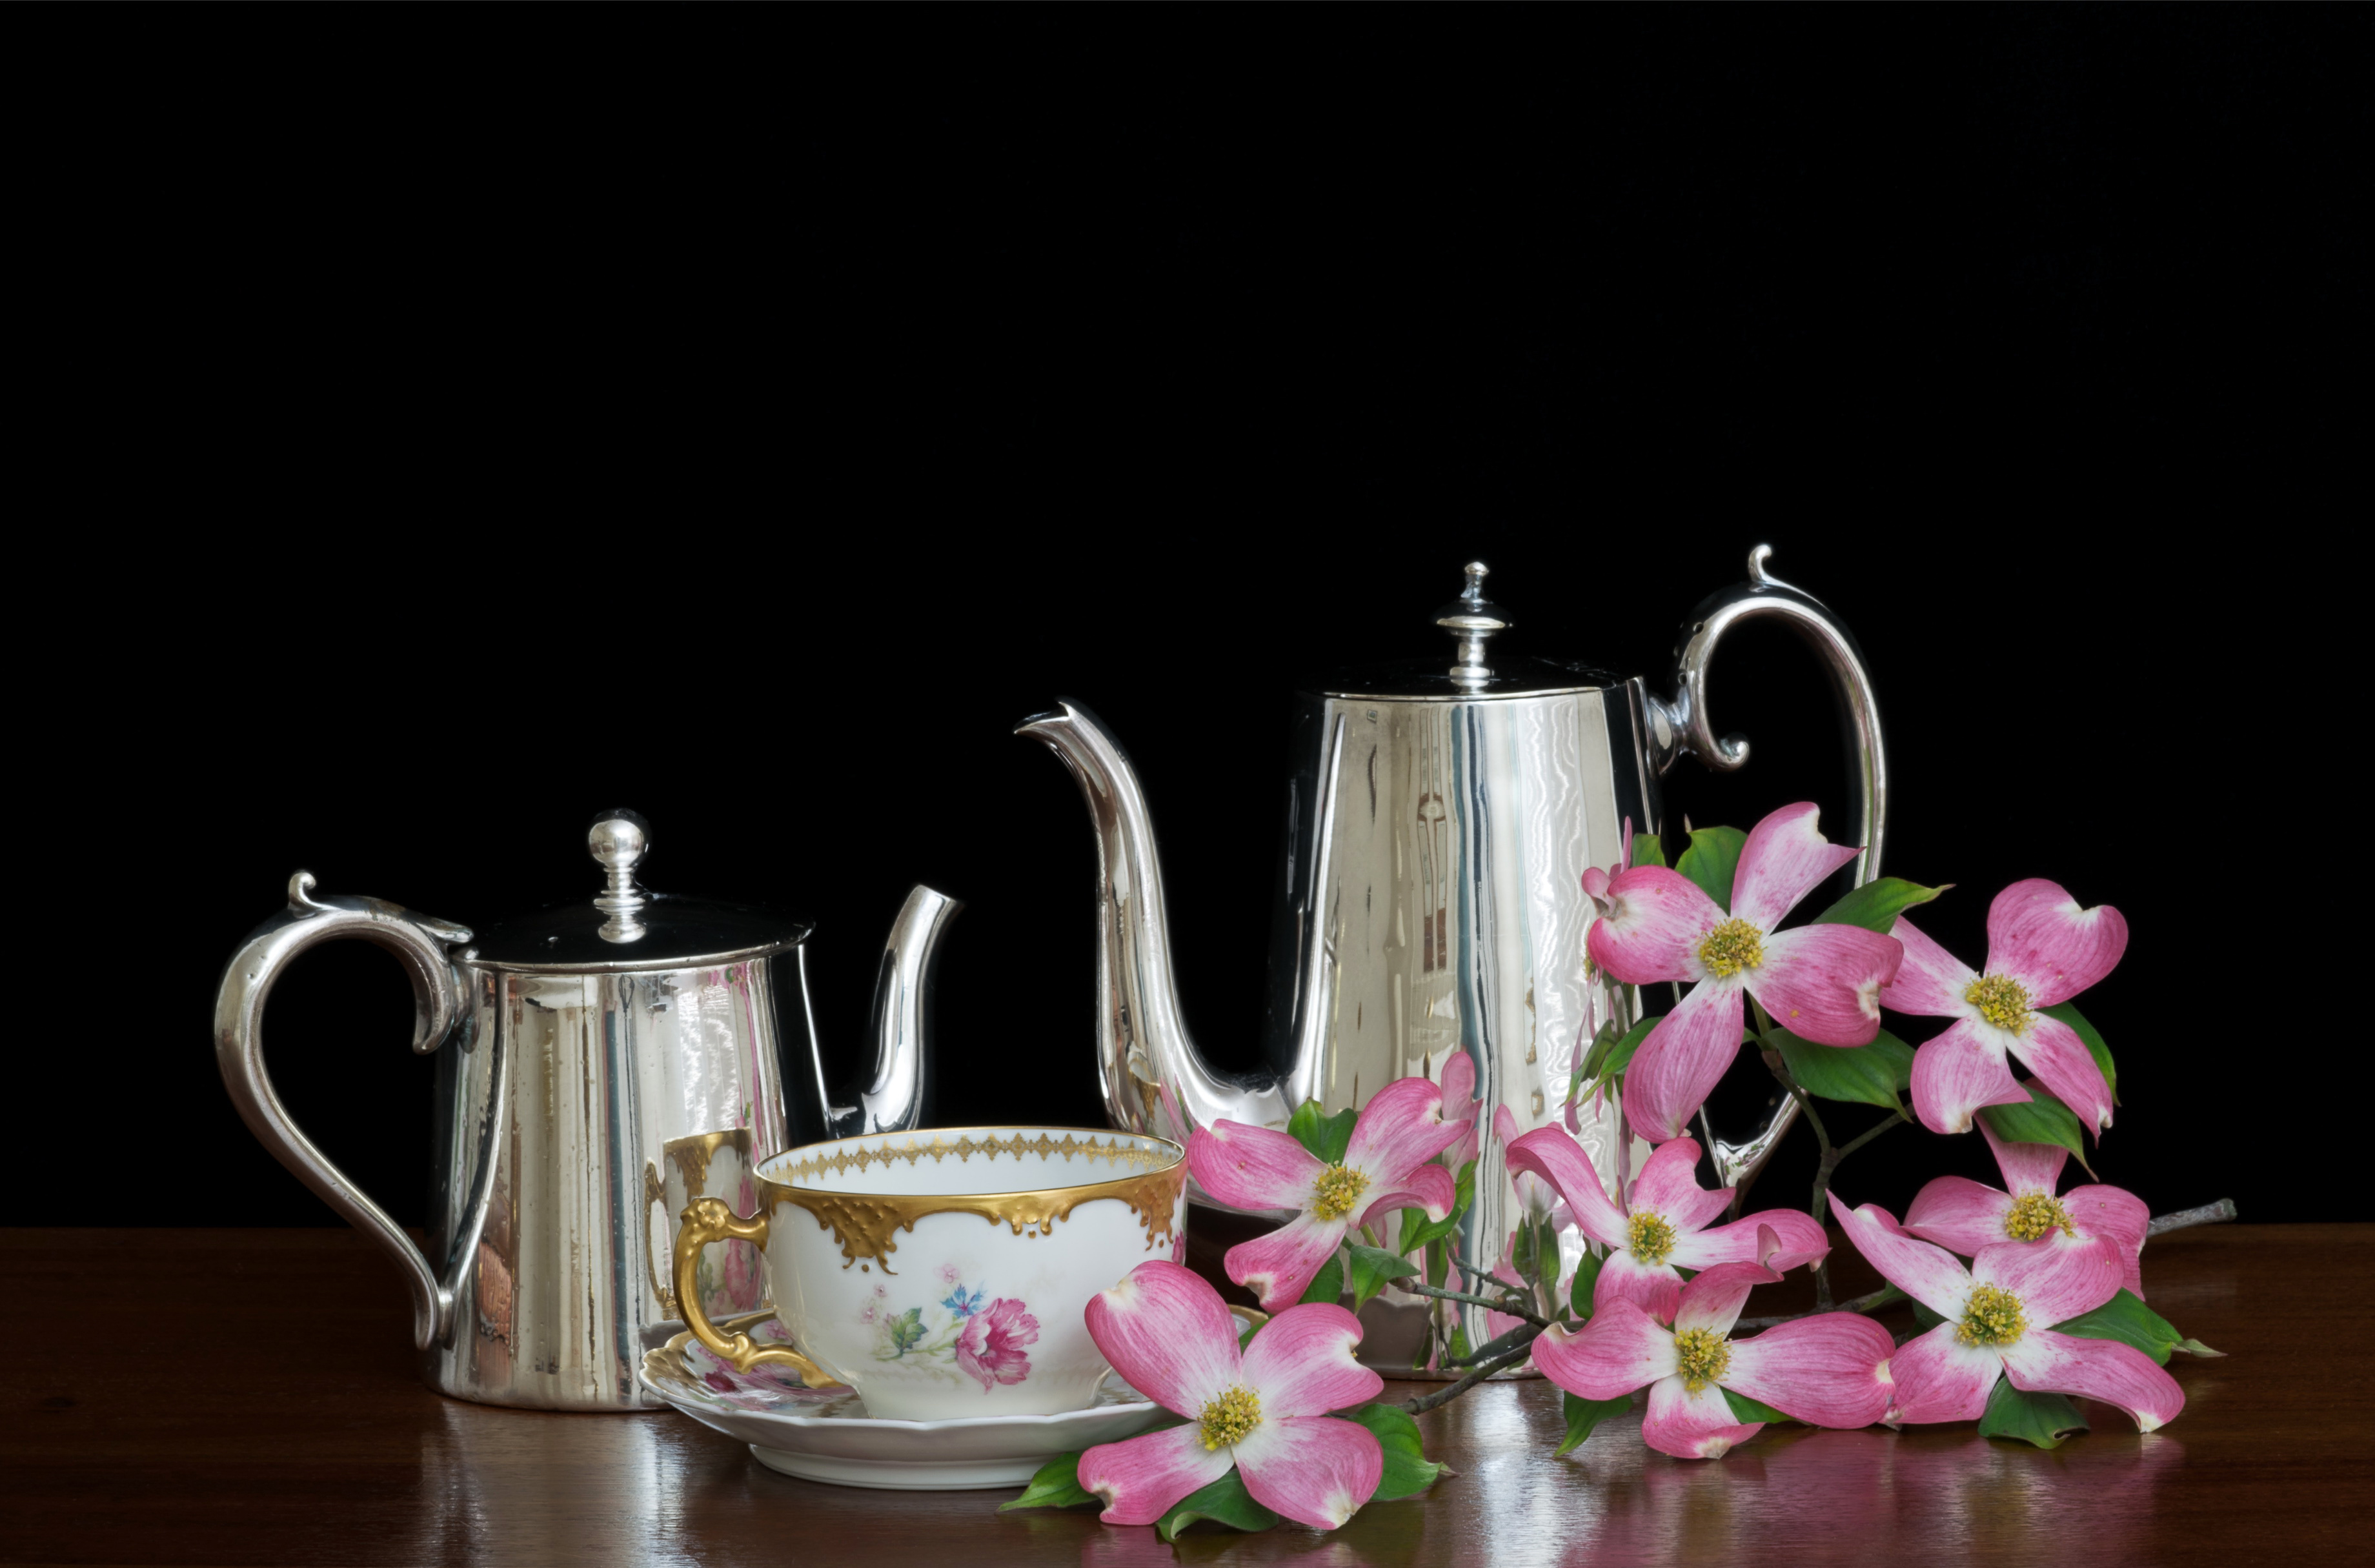 teapot wallpaper,still life photography,tableware,still life,teapot,jug